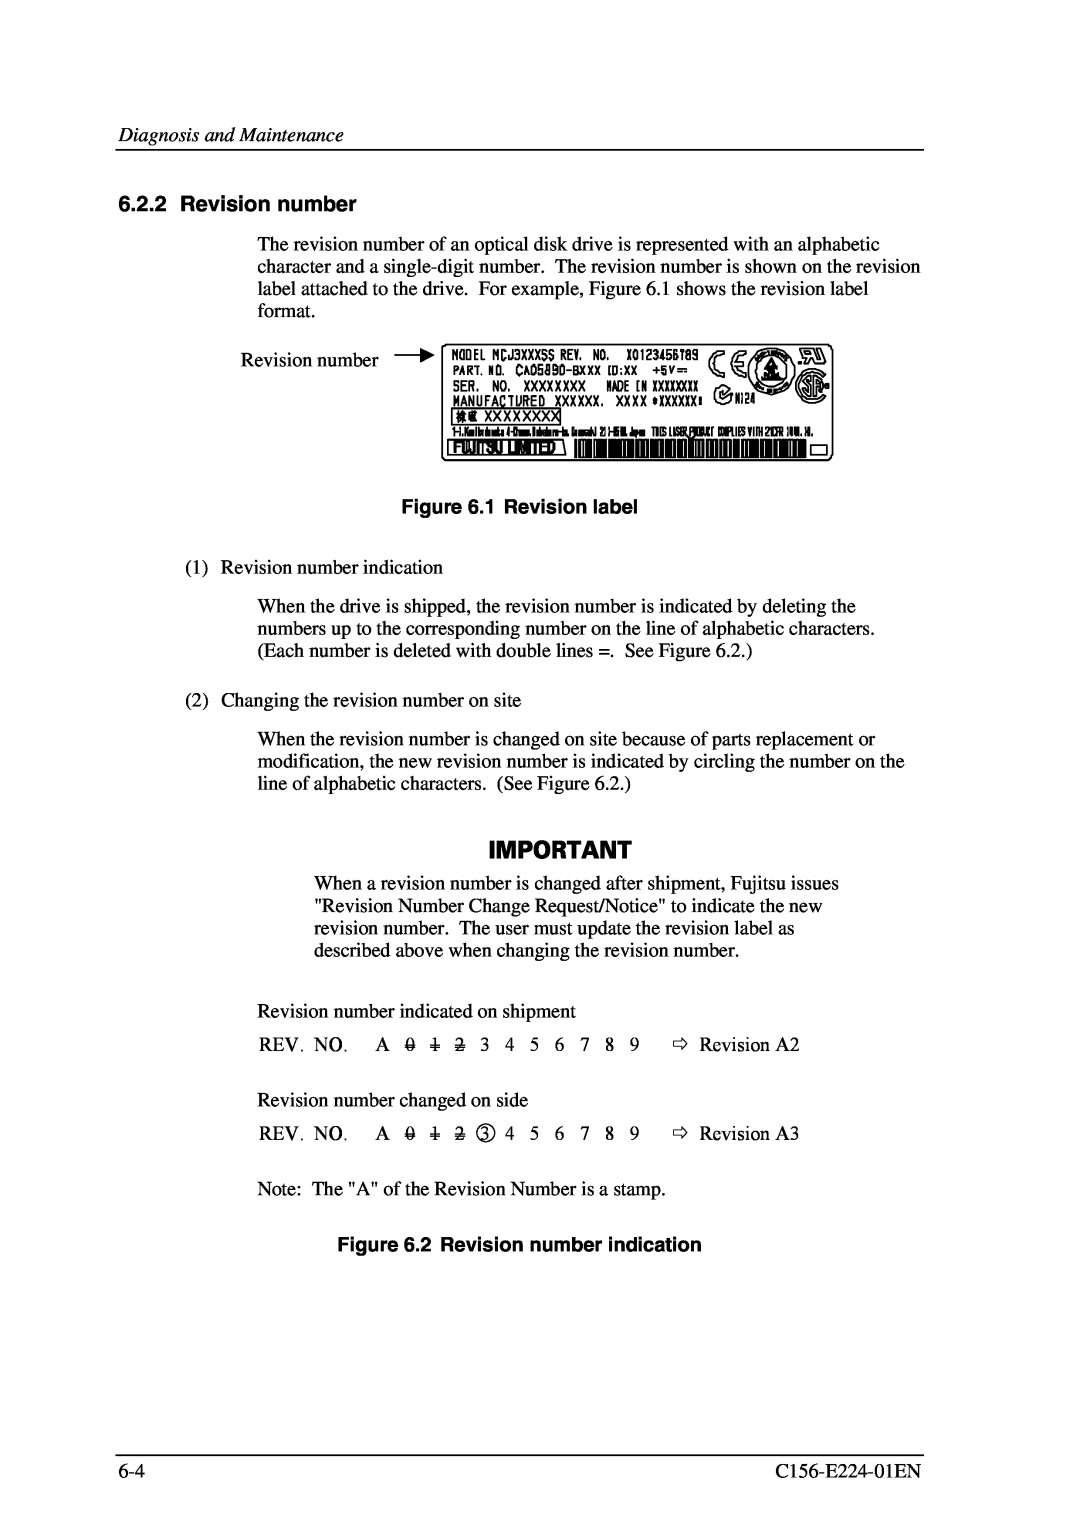 Fujitsu MCJ3230SS manual 1 Revision label, 2 Revision number indication 